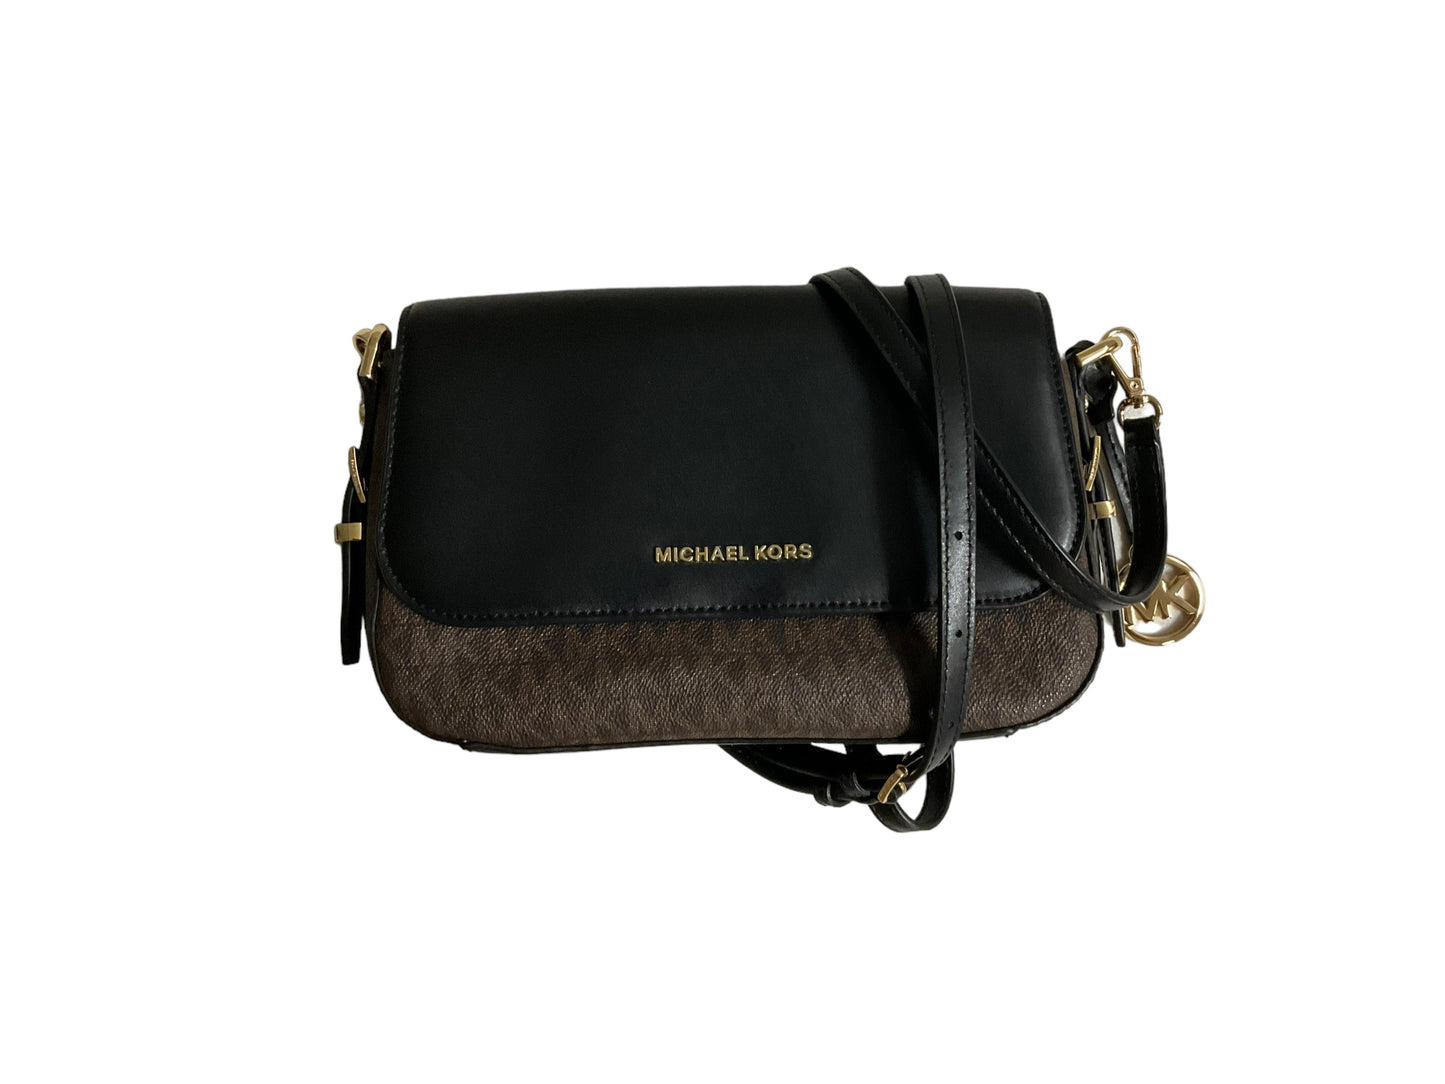 Brown Handbag Designer Michael Kors, Size Small